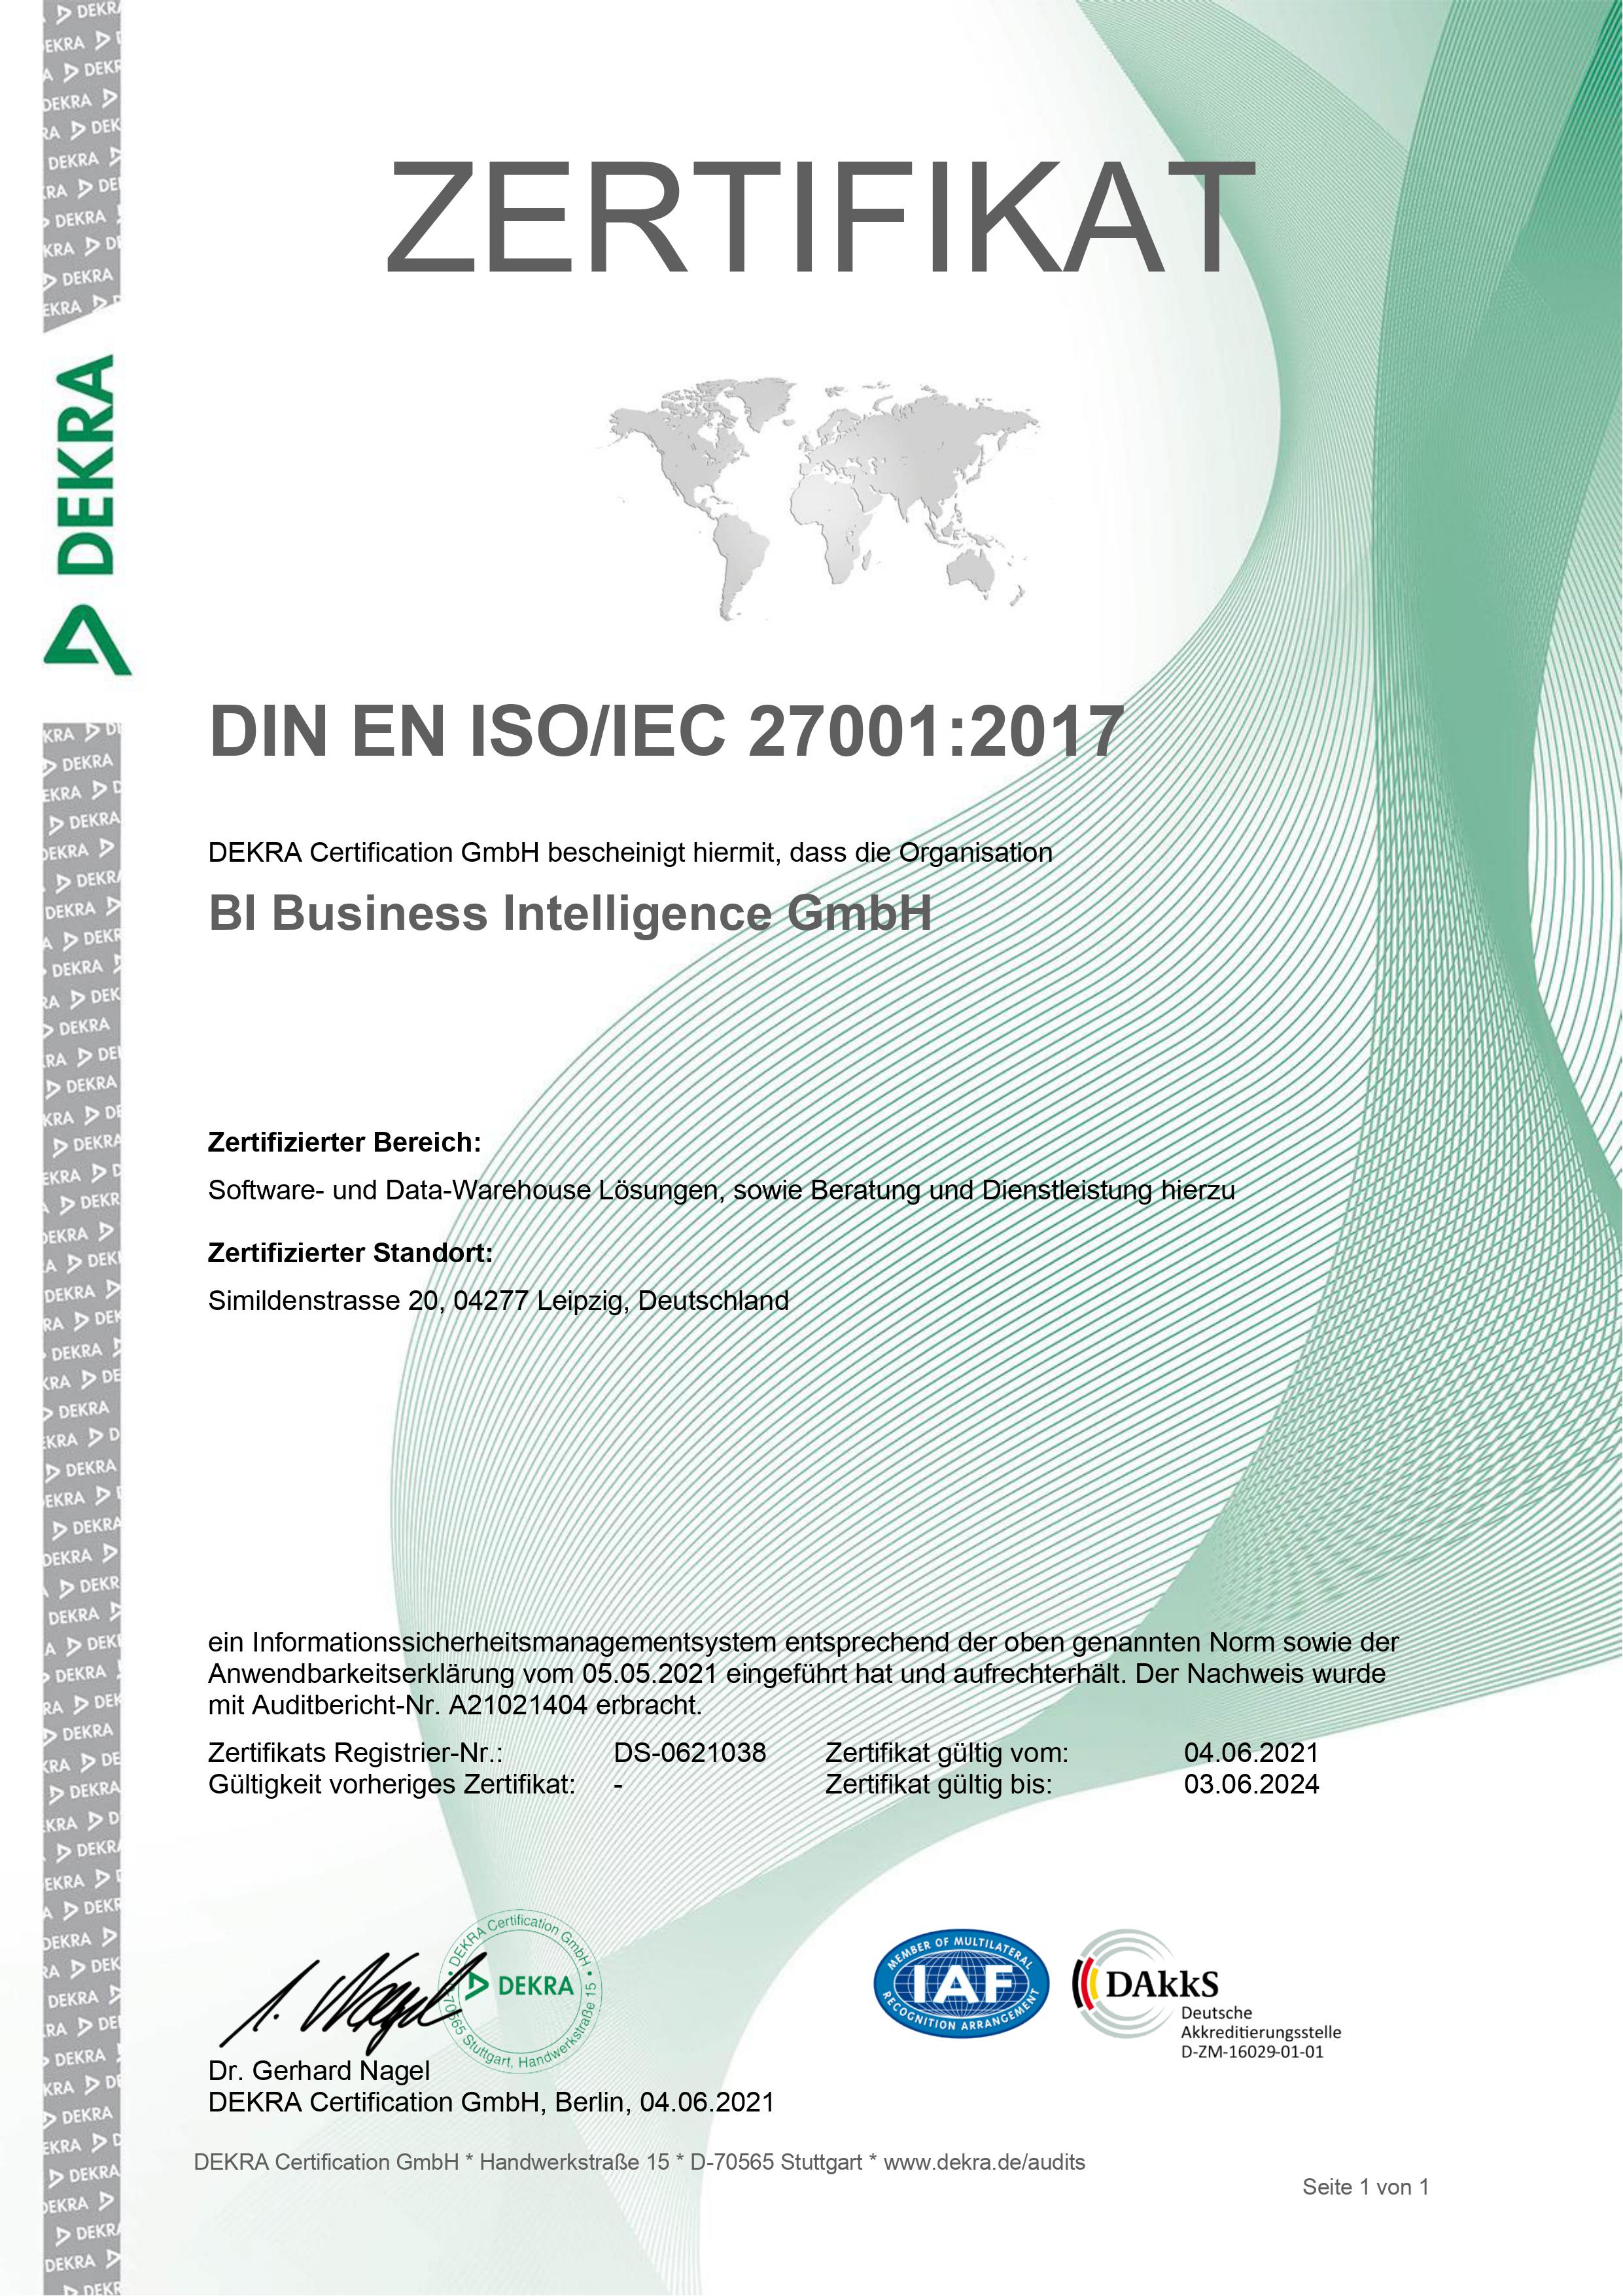 DEKRA DIN EN ISO/IEC 27001:2017 Zertifikat